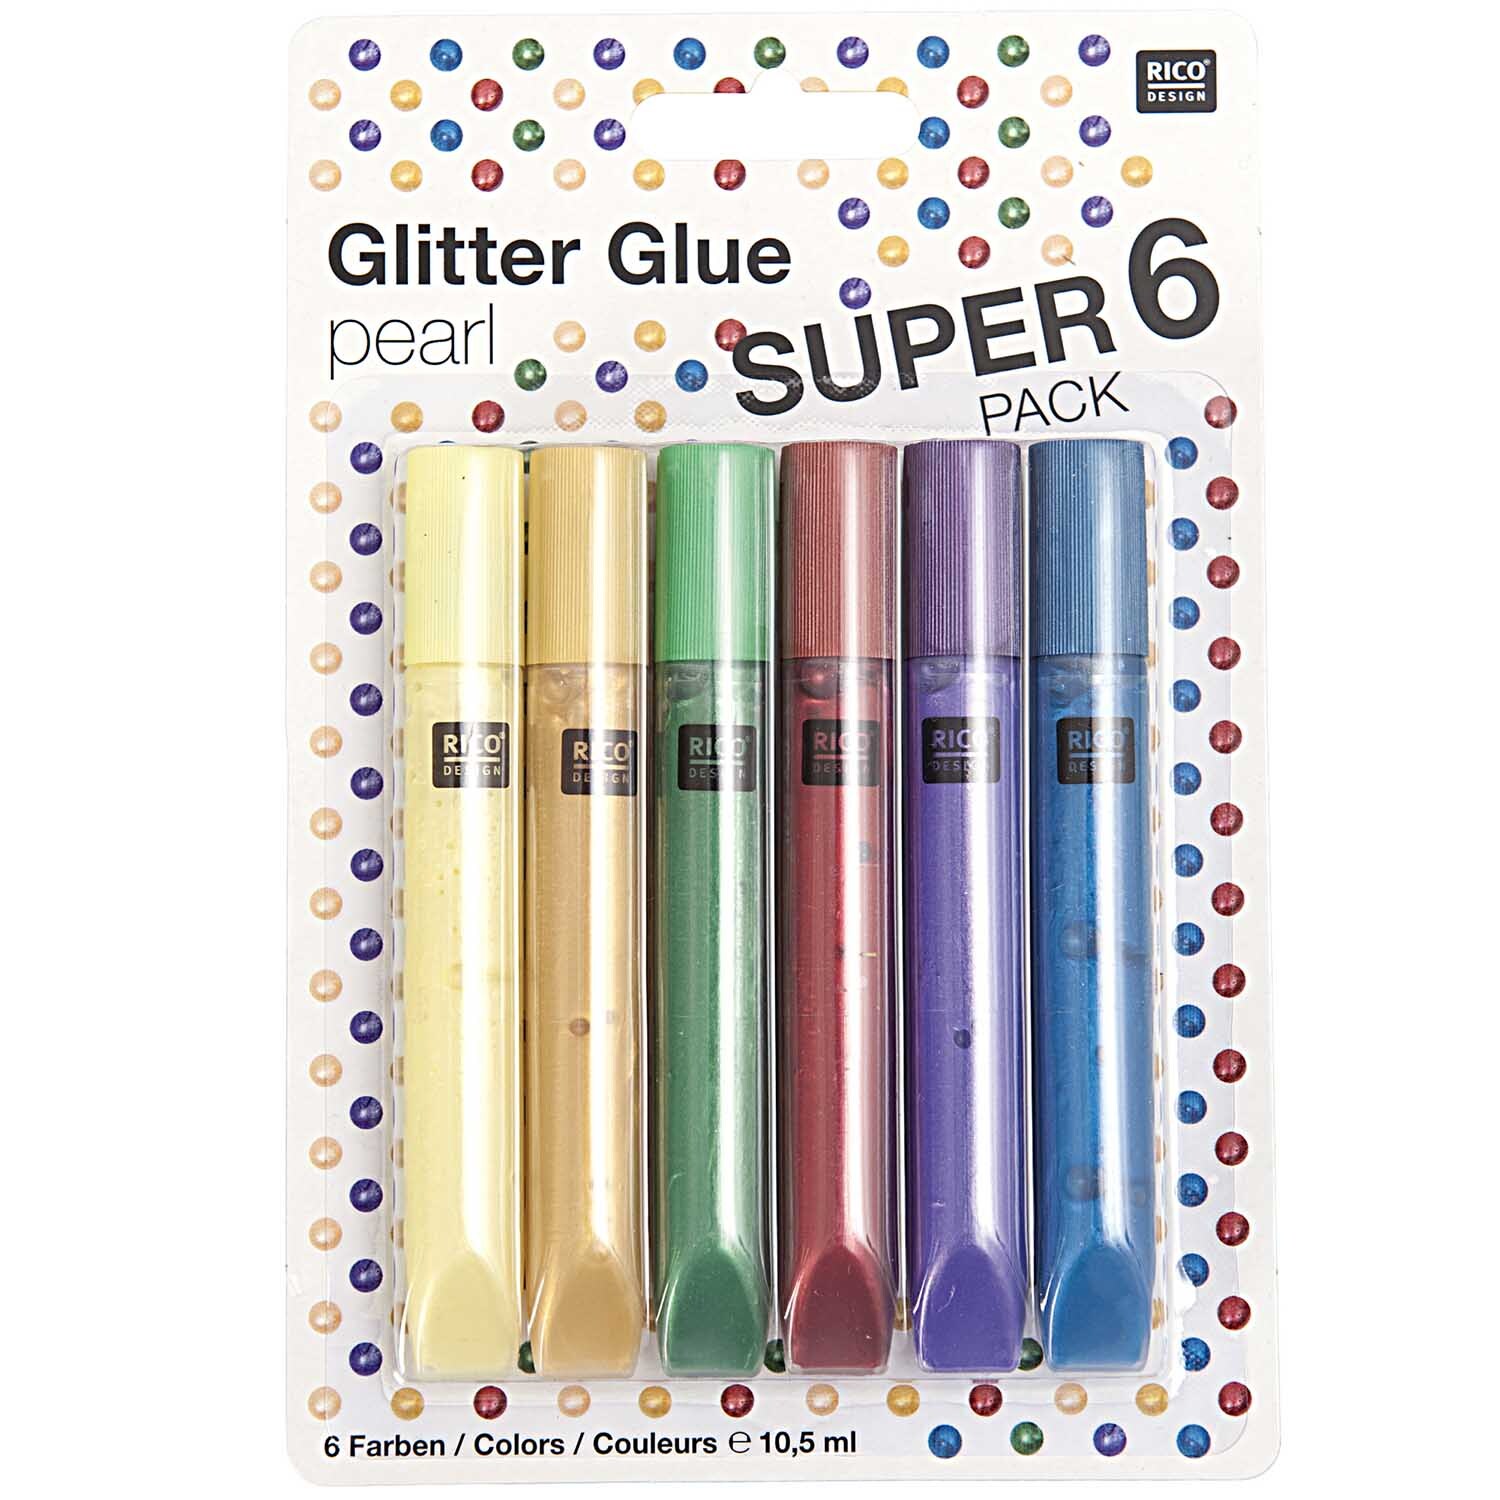 Glitter Glue pearl 6x10,5ml